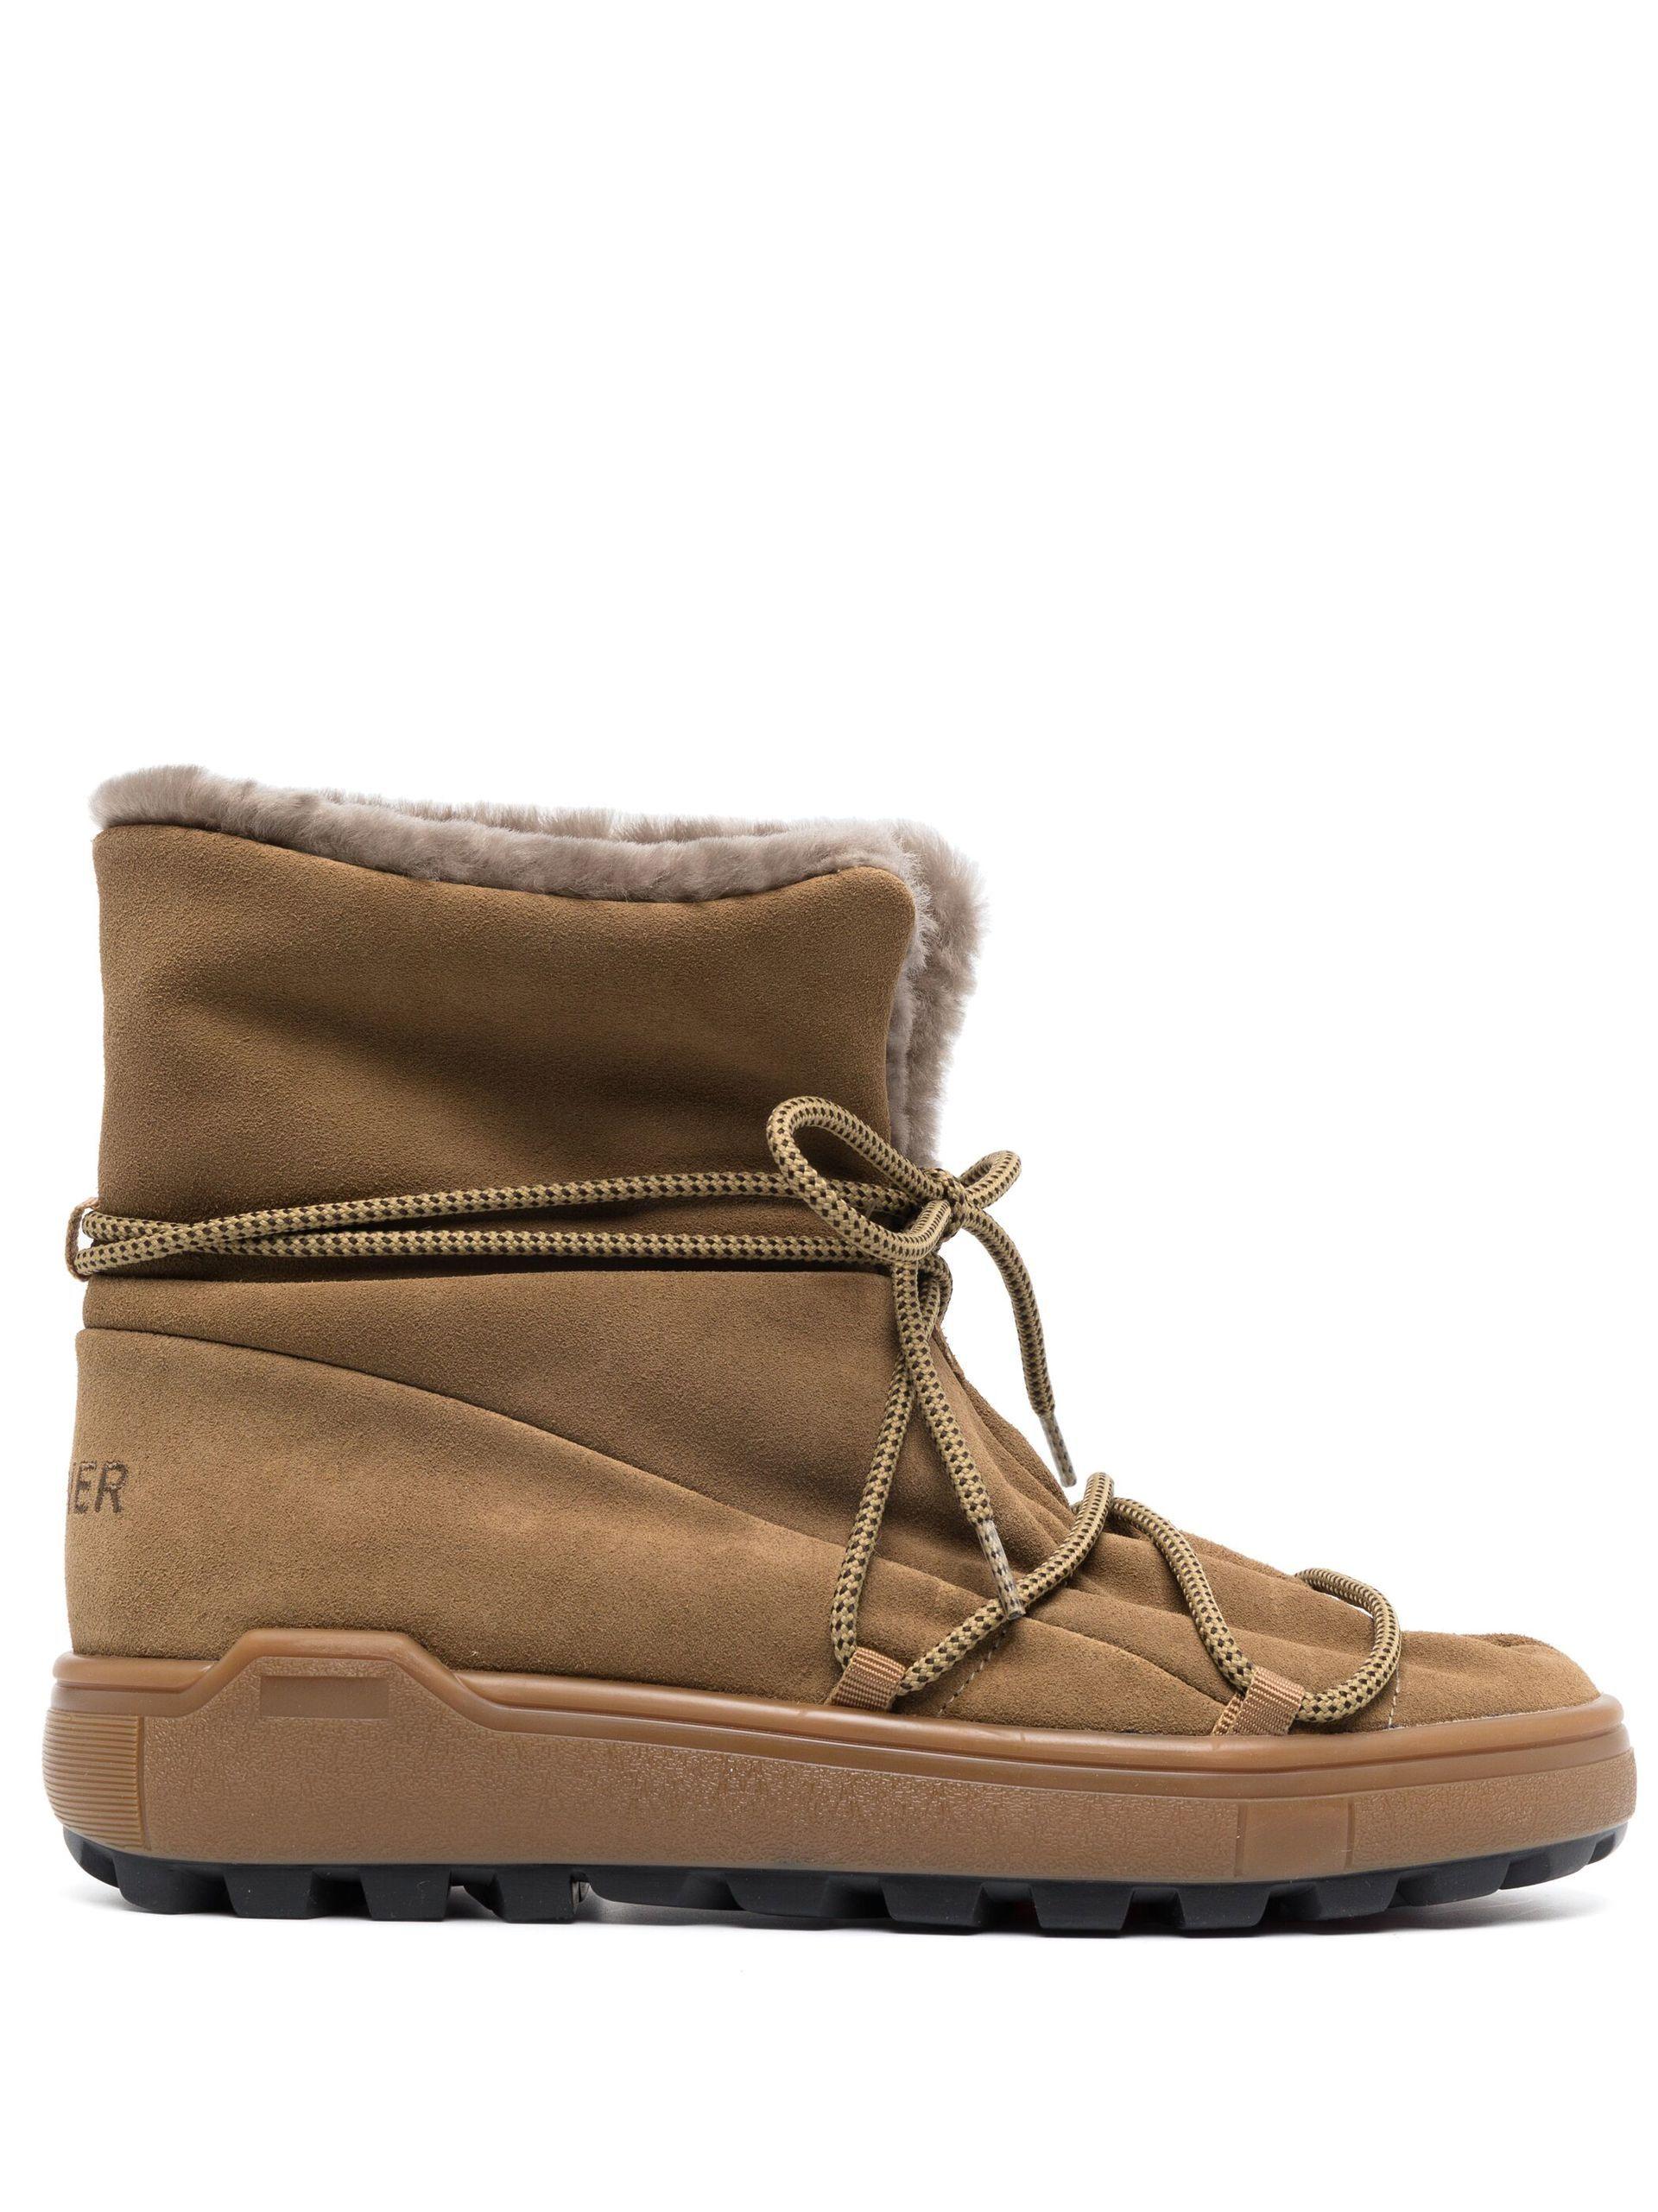 Bogner Chamonix Suede Snow Boots in Brown | Lyst